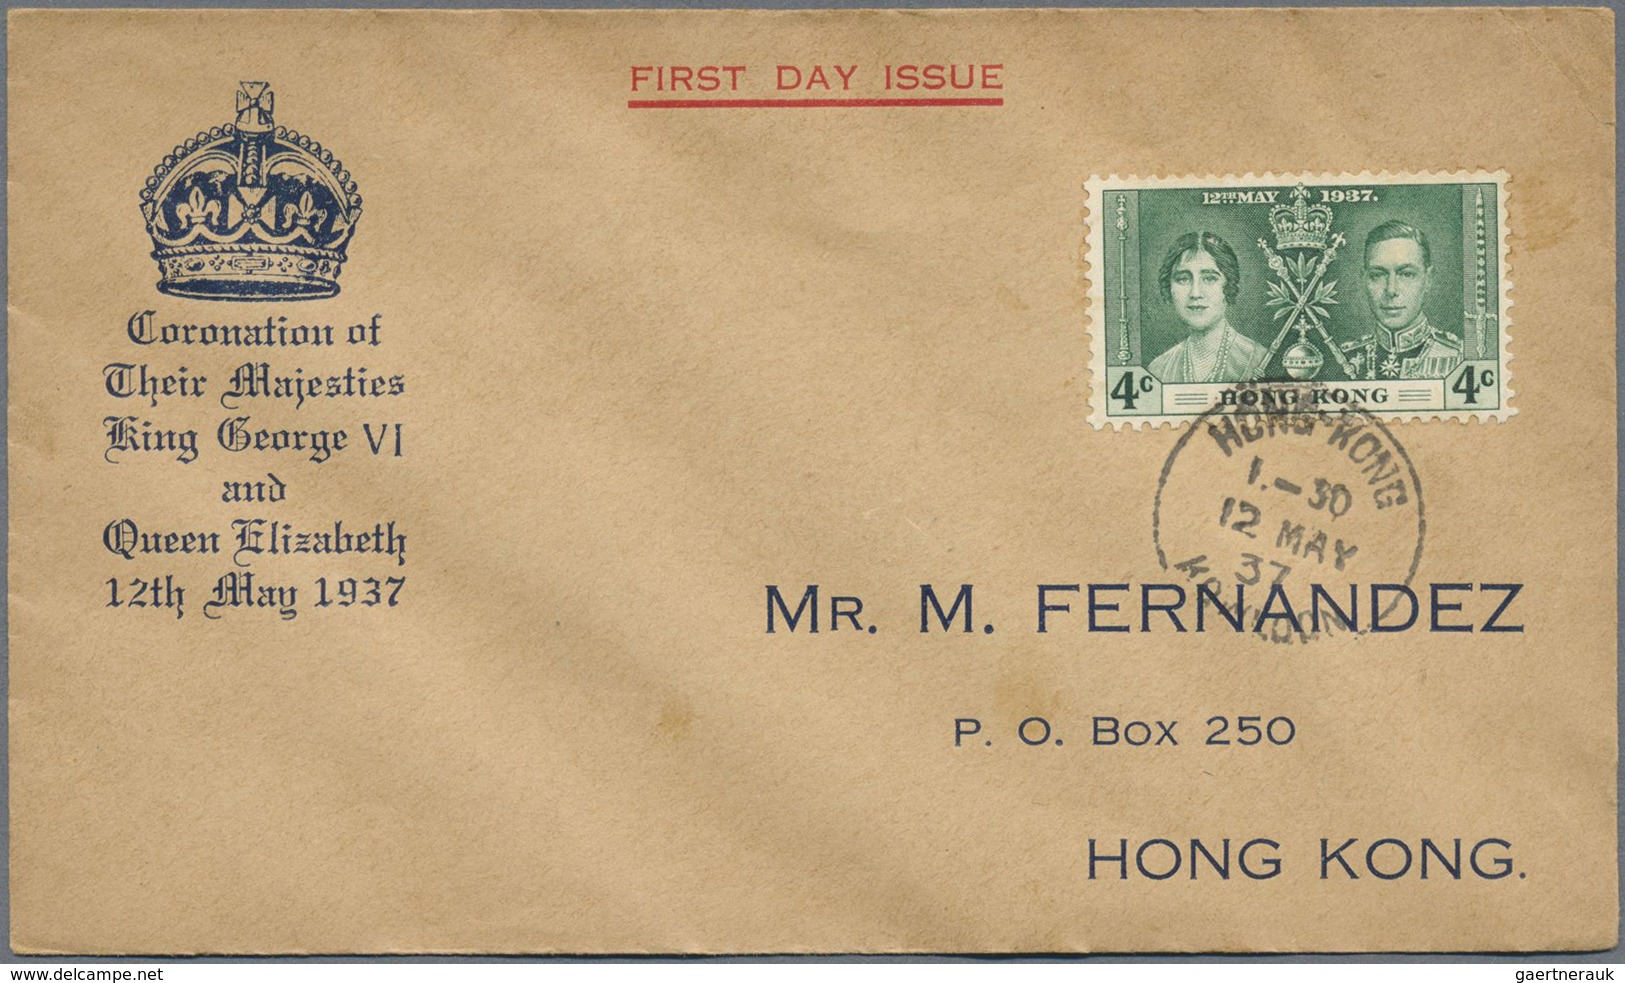 Br/ Hongkong: 1907/65 (ca.), covers/used ppc (97, often used to Singapore or Bangkok), FDC 1937/73 (9),